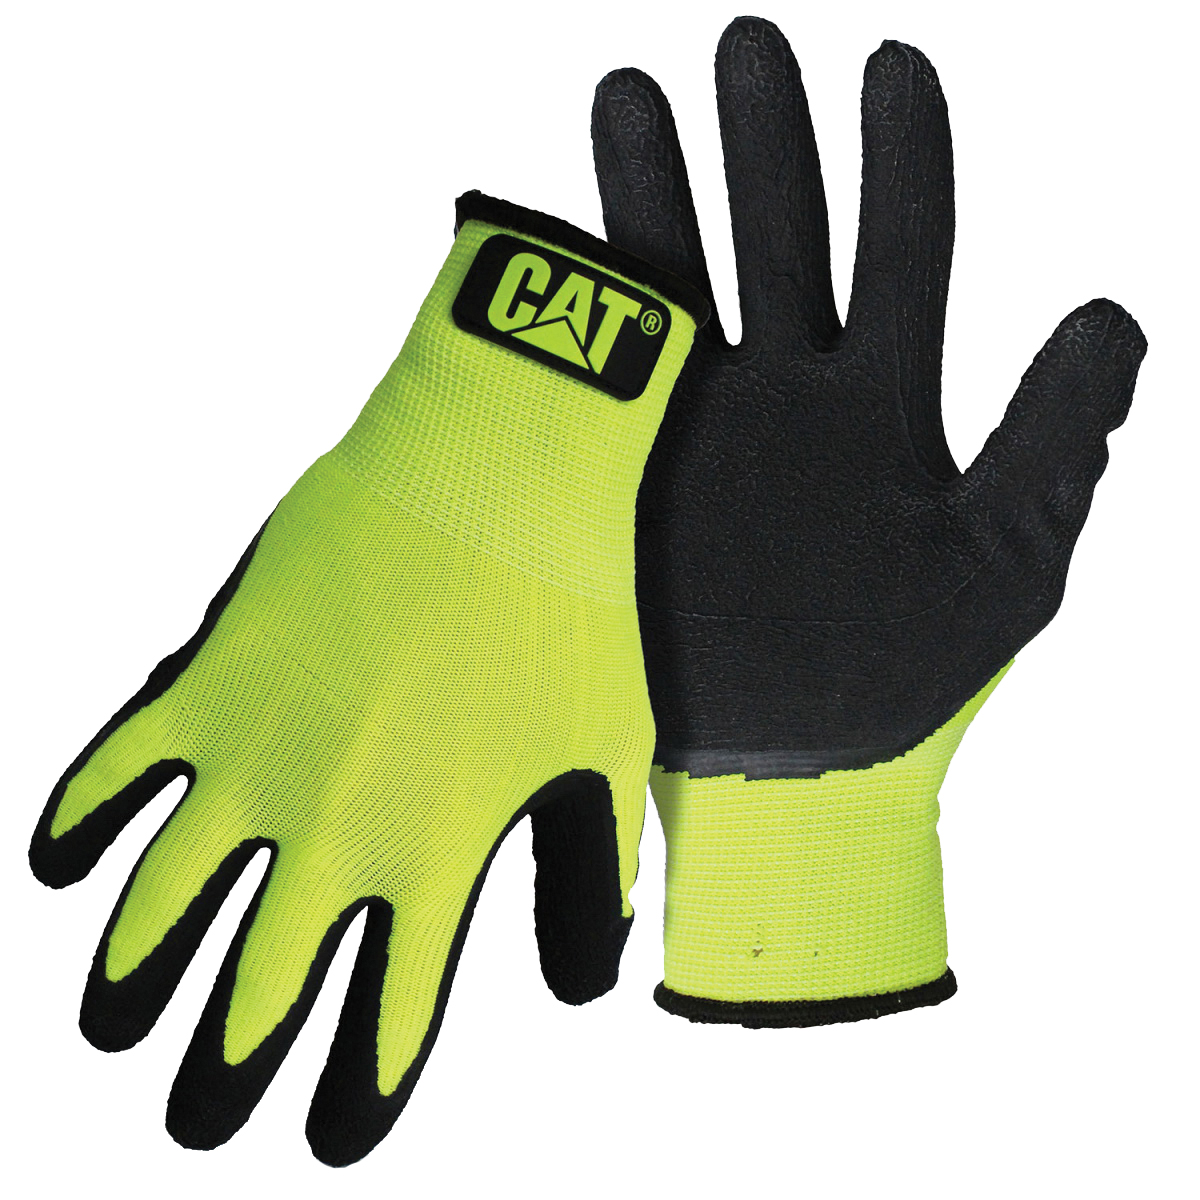 CAT017418-XL Coated Gloves, XL, Knit Wrist Cuff, Latex Coating, Polyester Glove, Hi-Viz Green